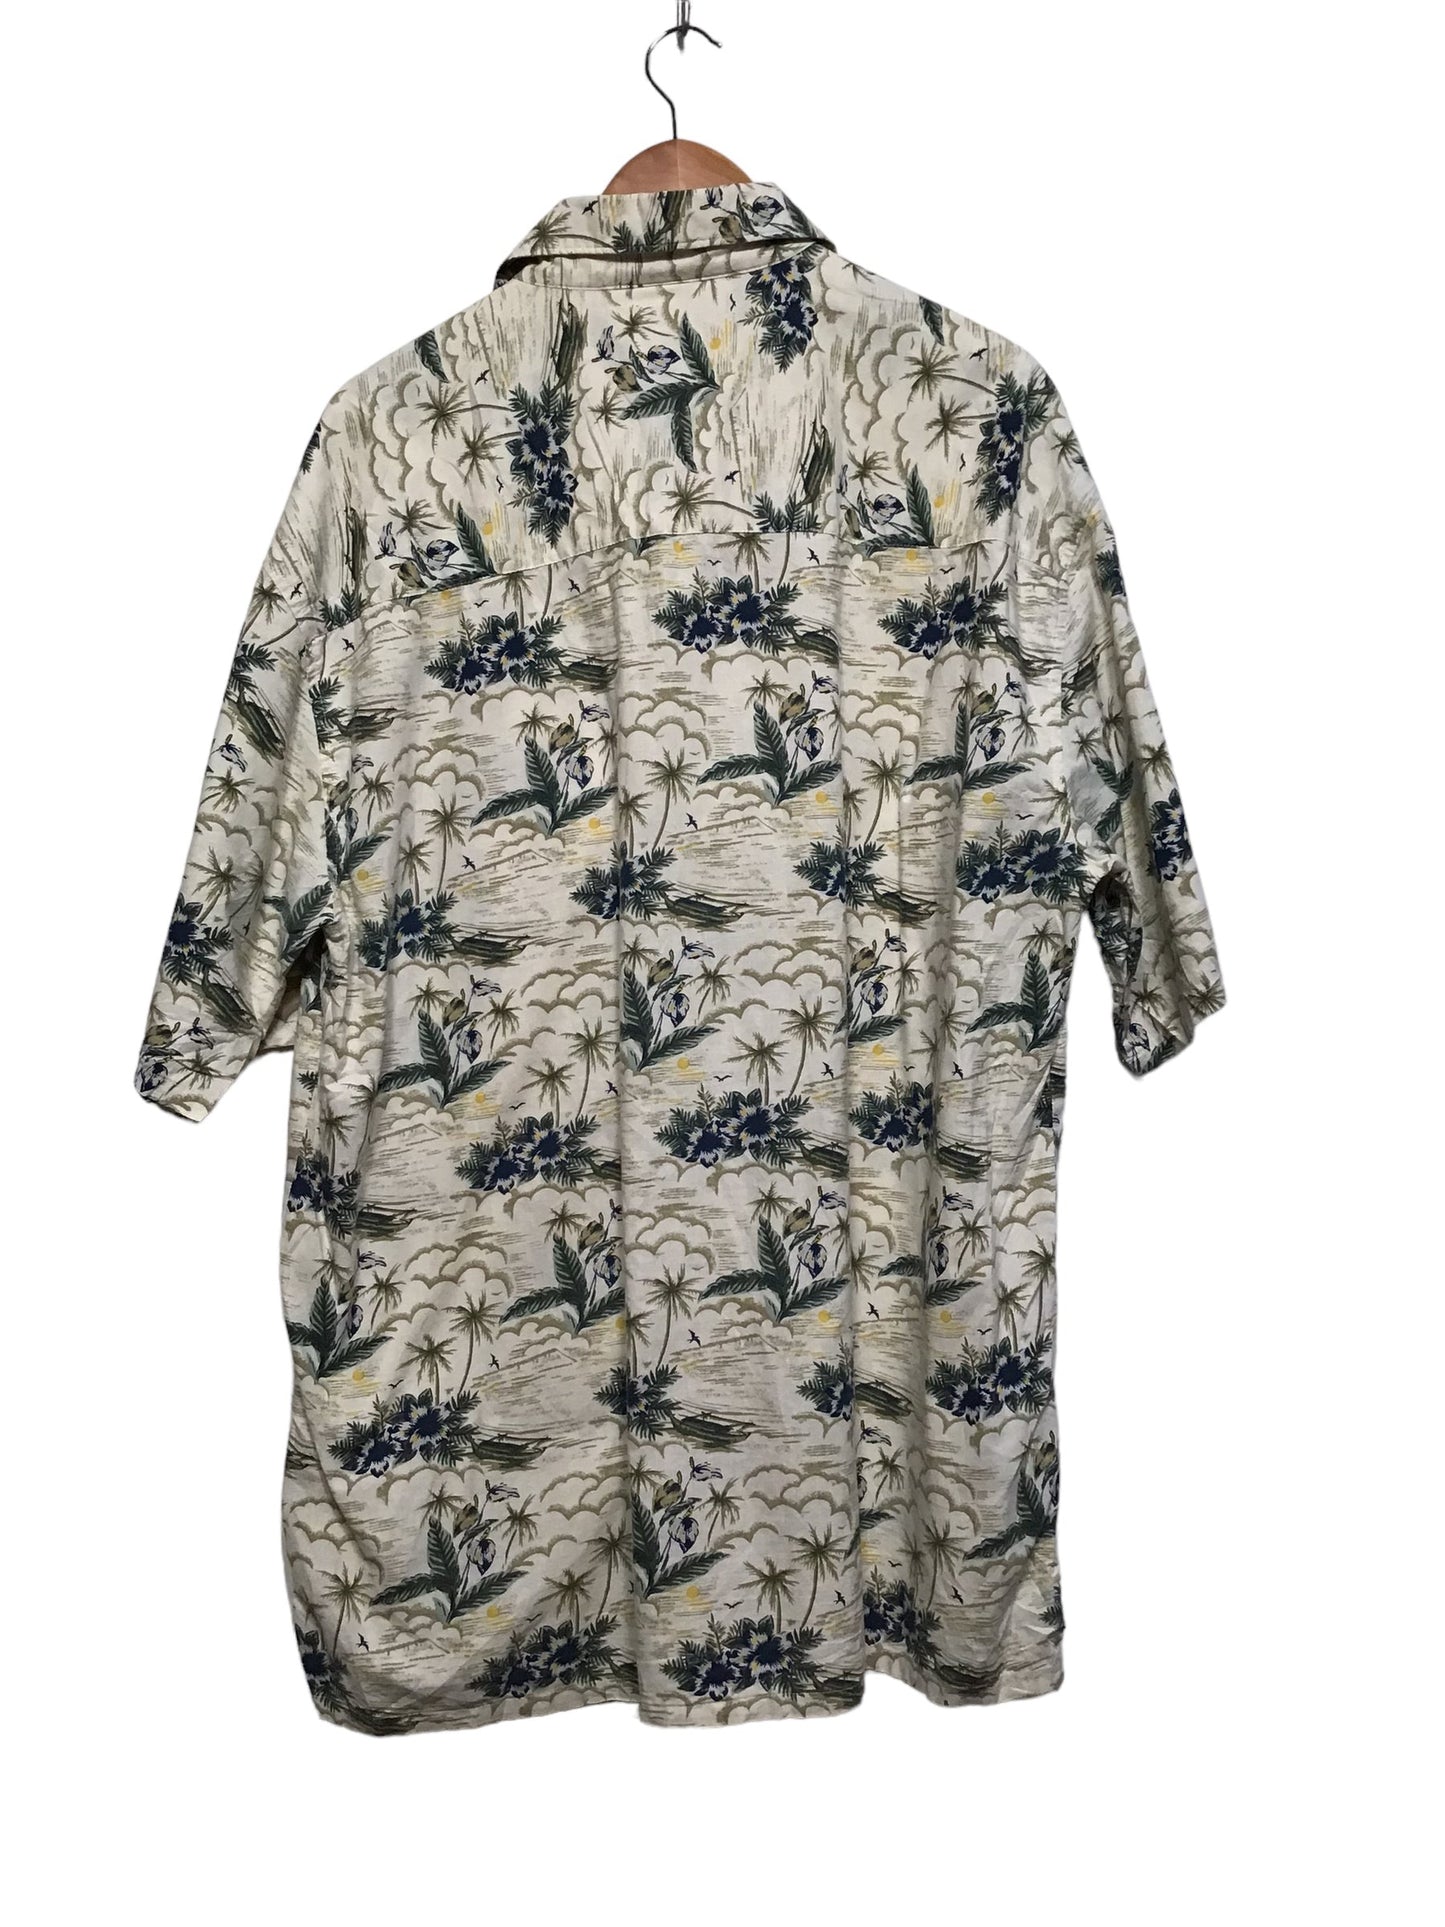 Third Coast Shirt (Size L)